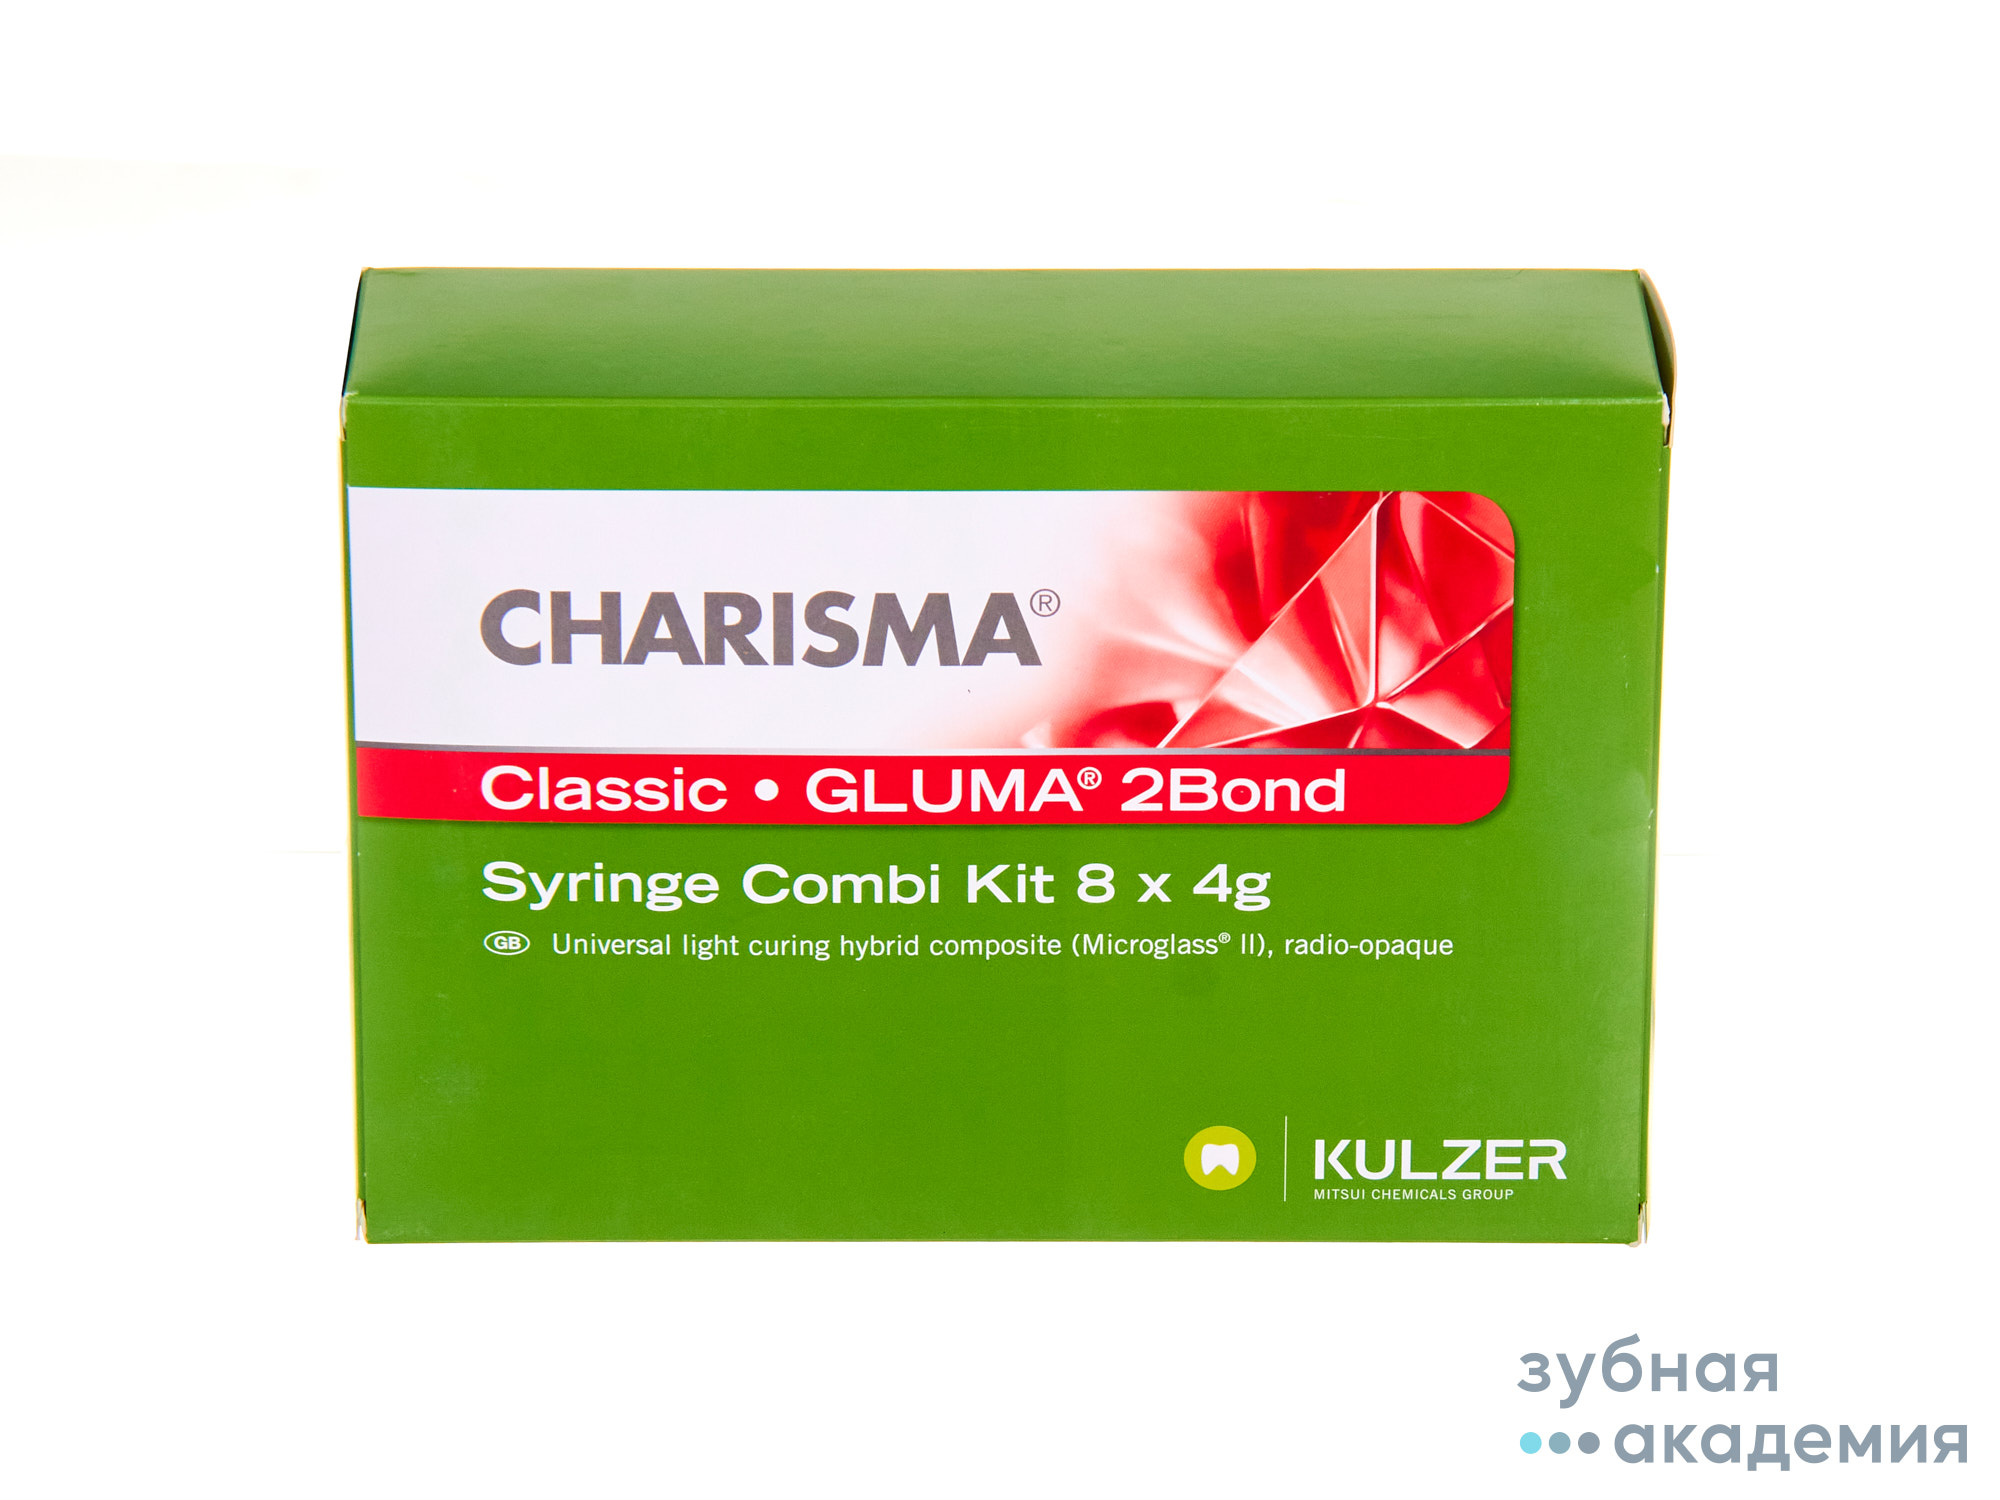 Charisma Classic Syr Kit / Каризма Классик Сир Кит набор (8 х 4г + 4мл + 2 х 2,5мл) Kulzer/ Германия